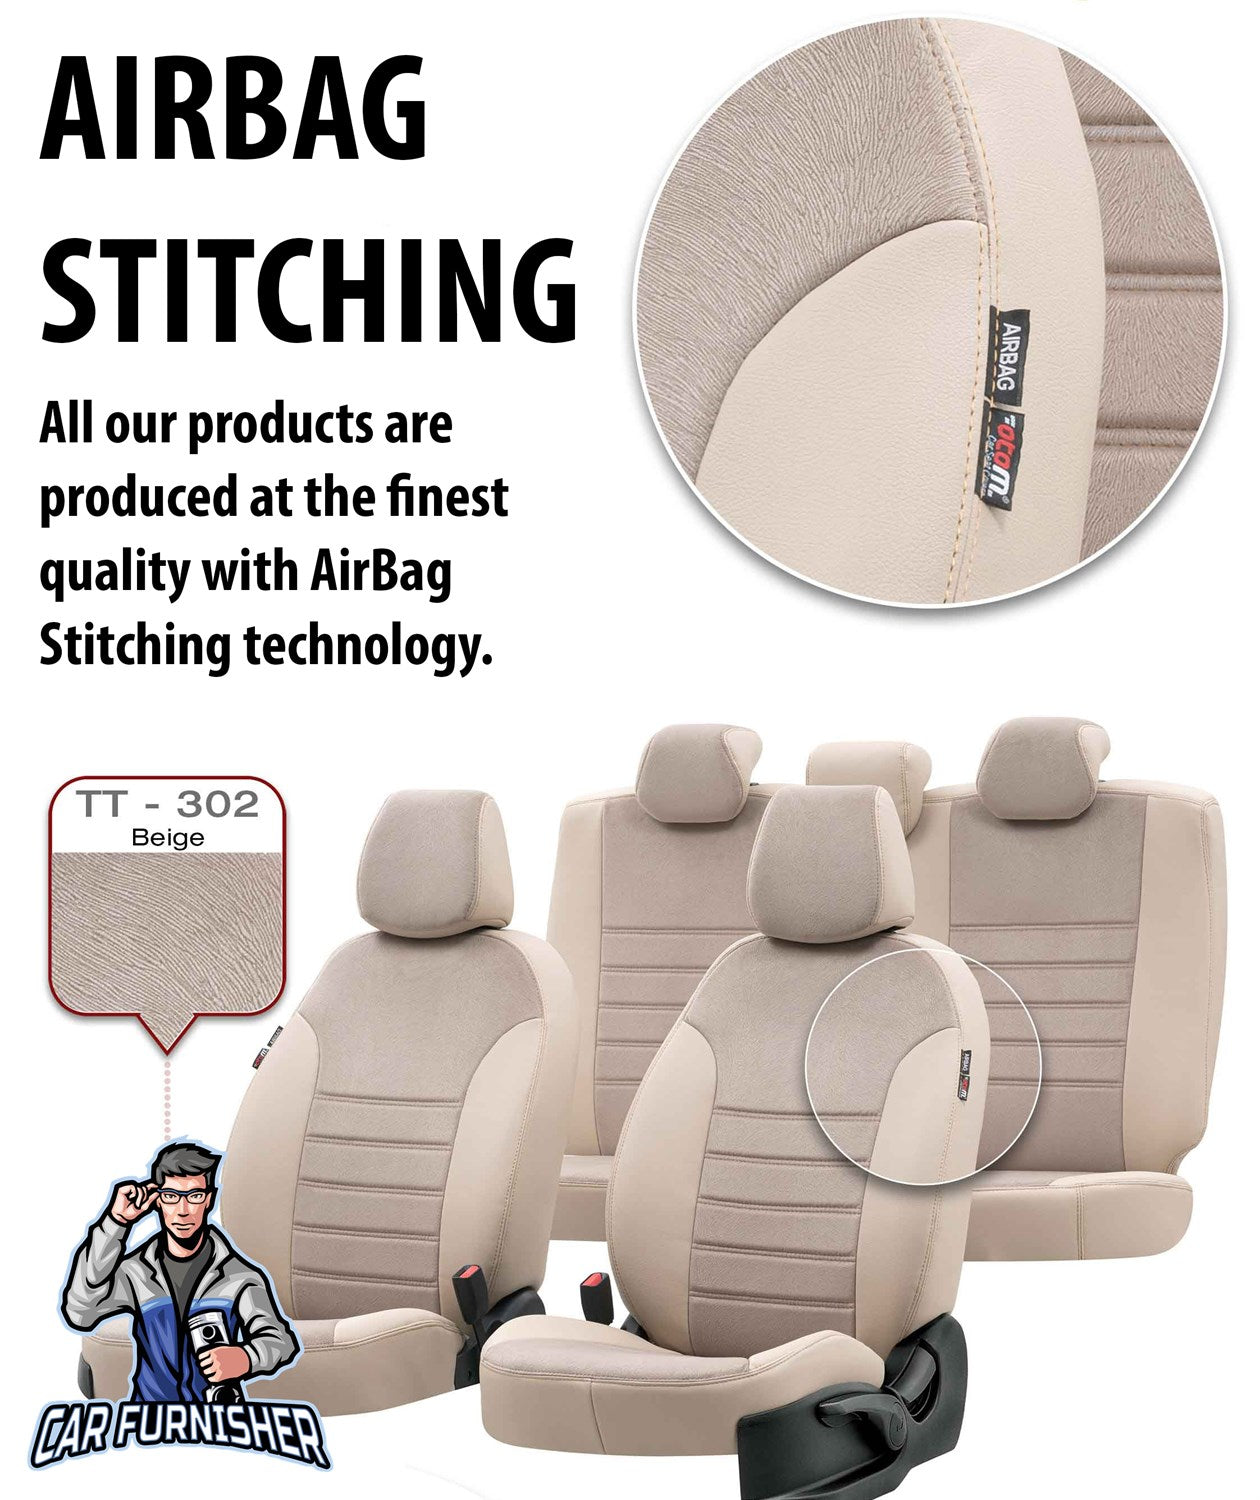 Citroen Nemo Car Seat Covers 2008-2016 London Design Ivory Full Set (5 Seats + Handrest) Leather & Fabric